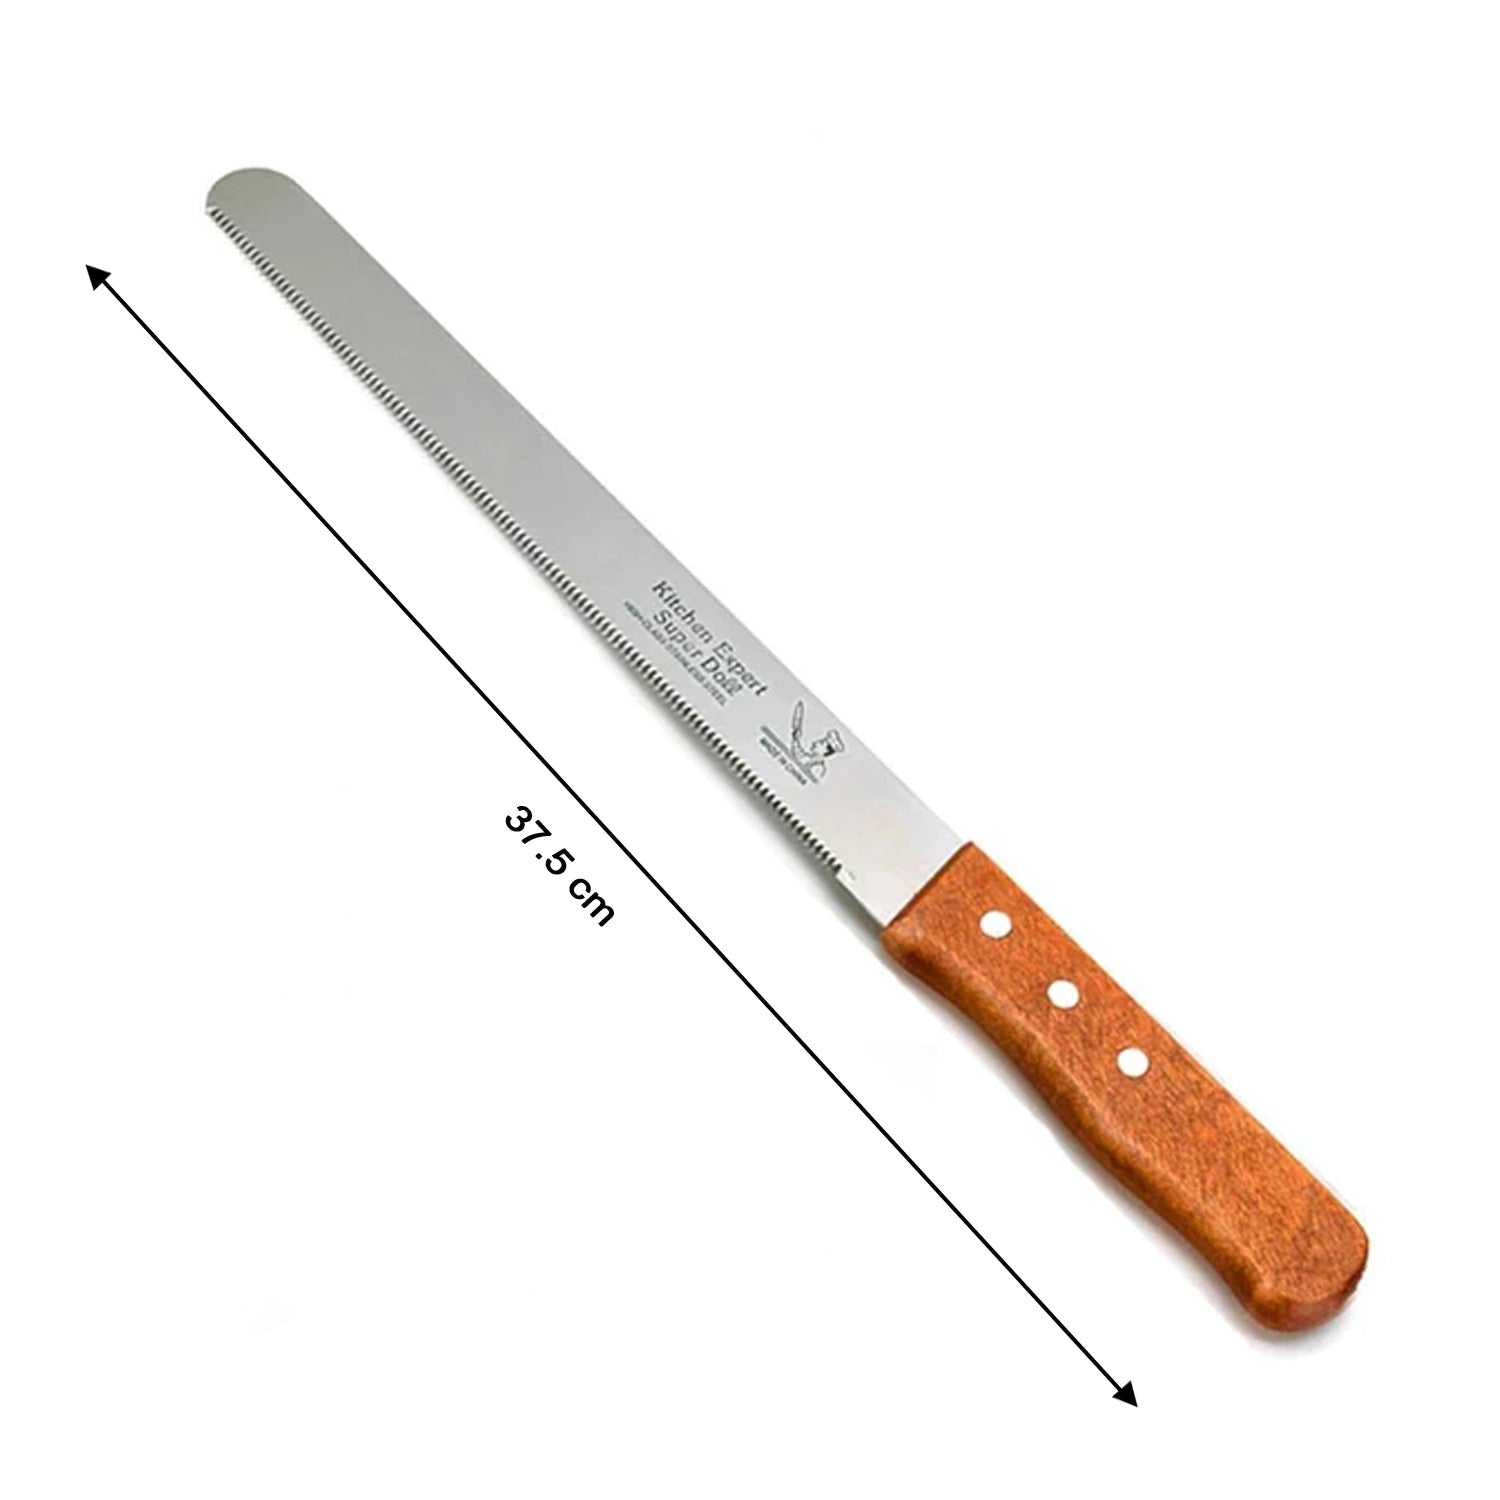 2996 Bread Knife, 15Inch Bread knife to Cut Bread/Cake. Bread Knife for Homemade Bread, Baker's Knife for Slicing DeoDap